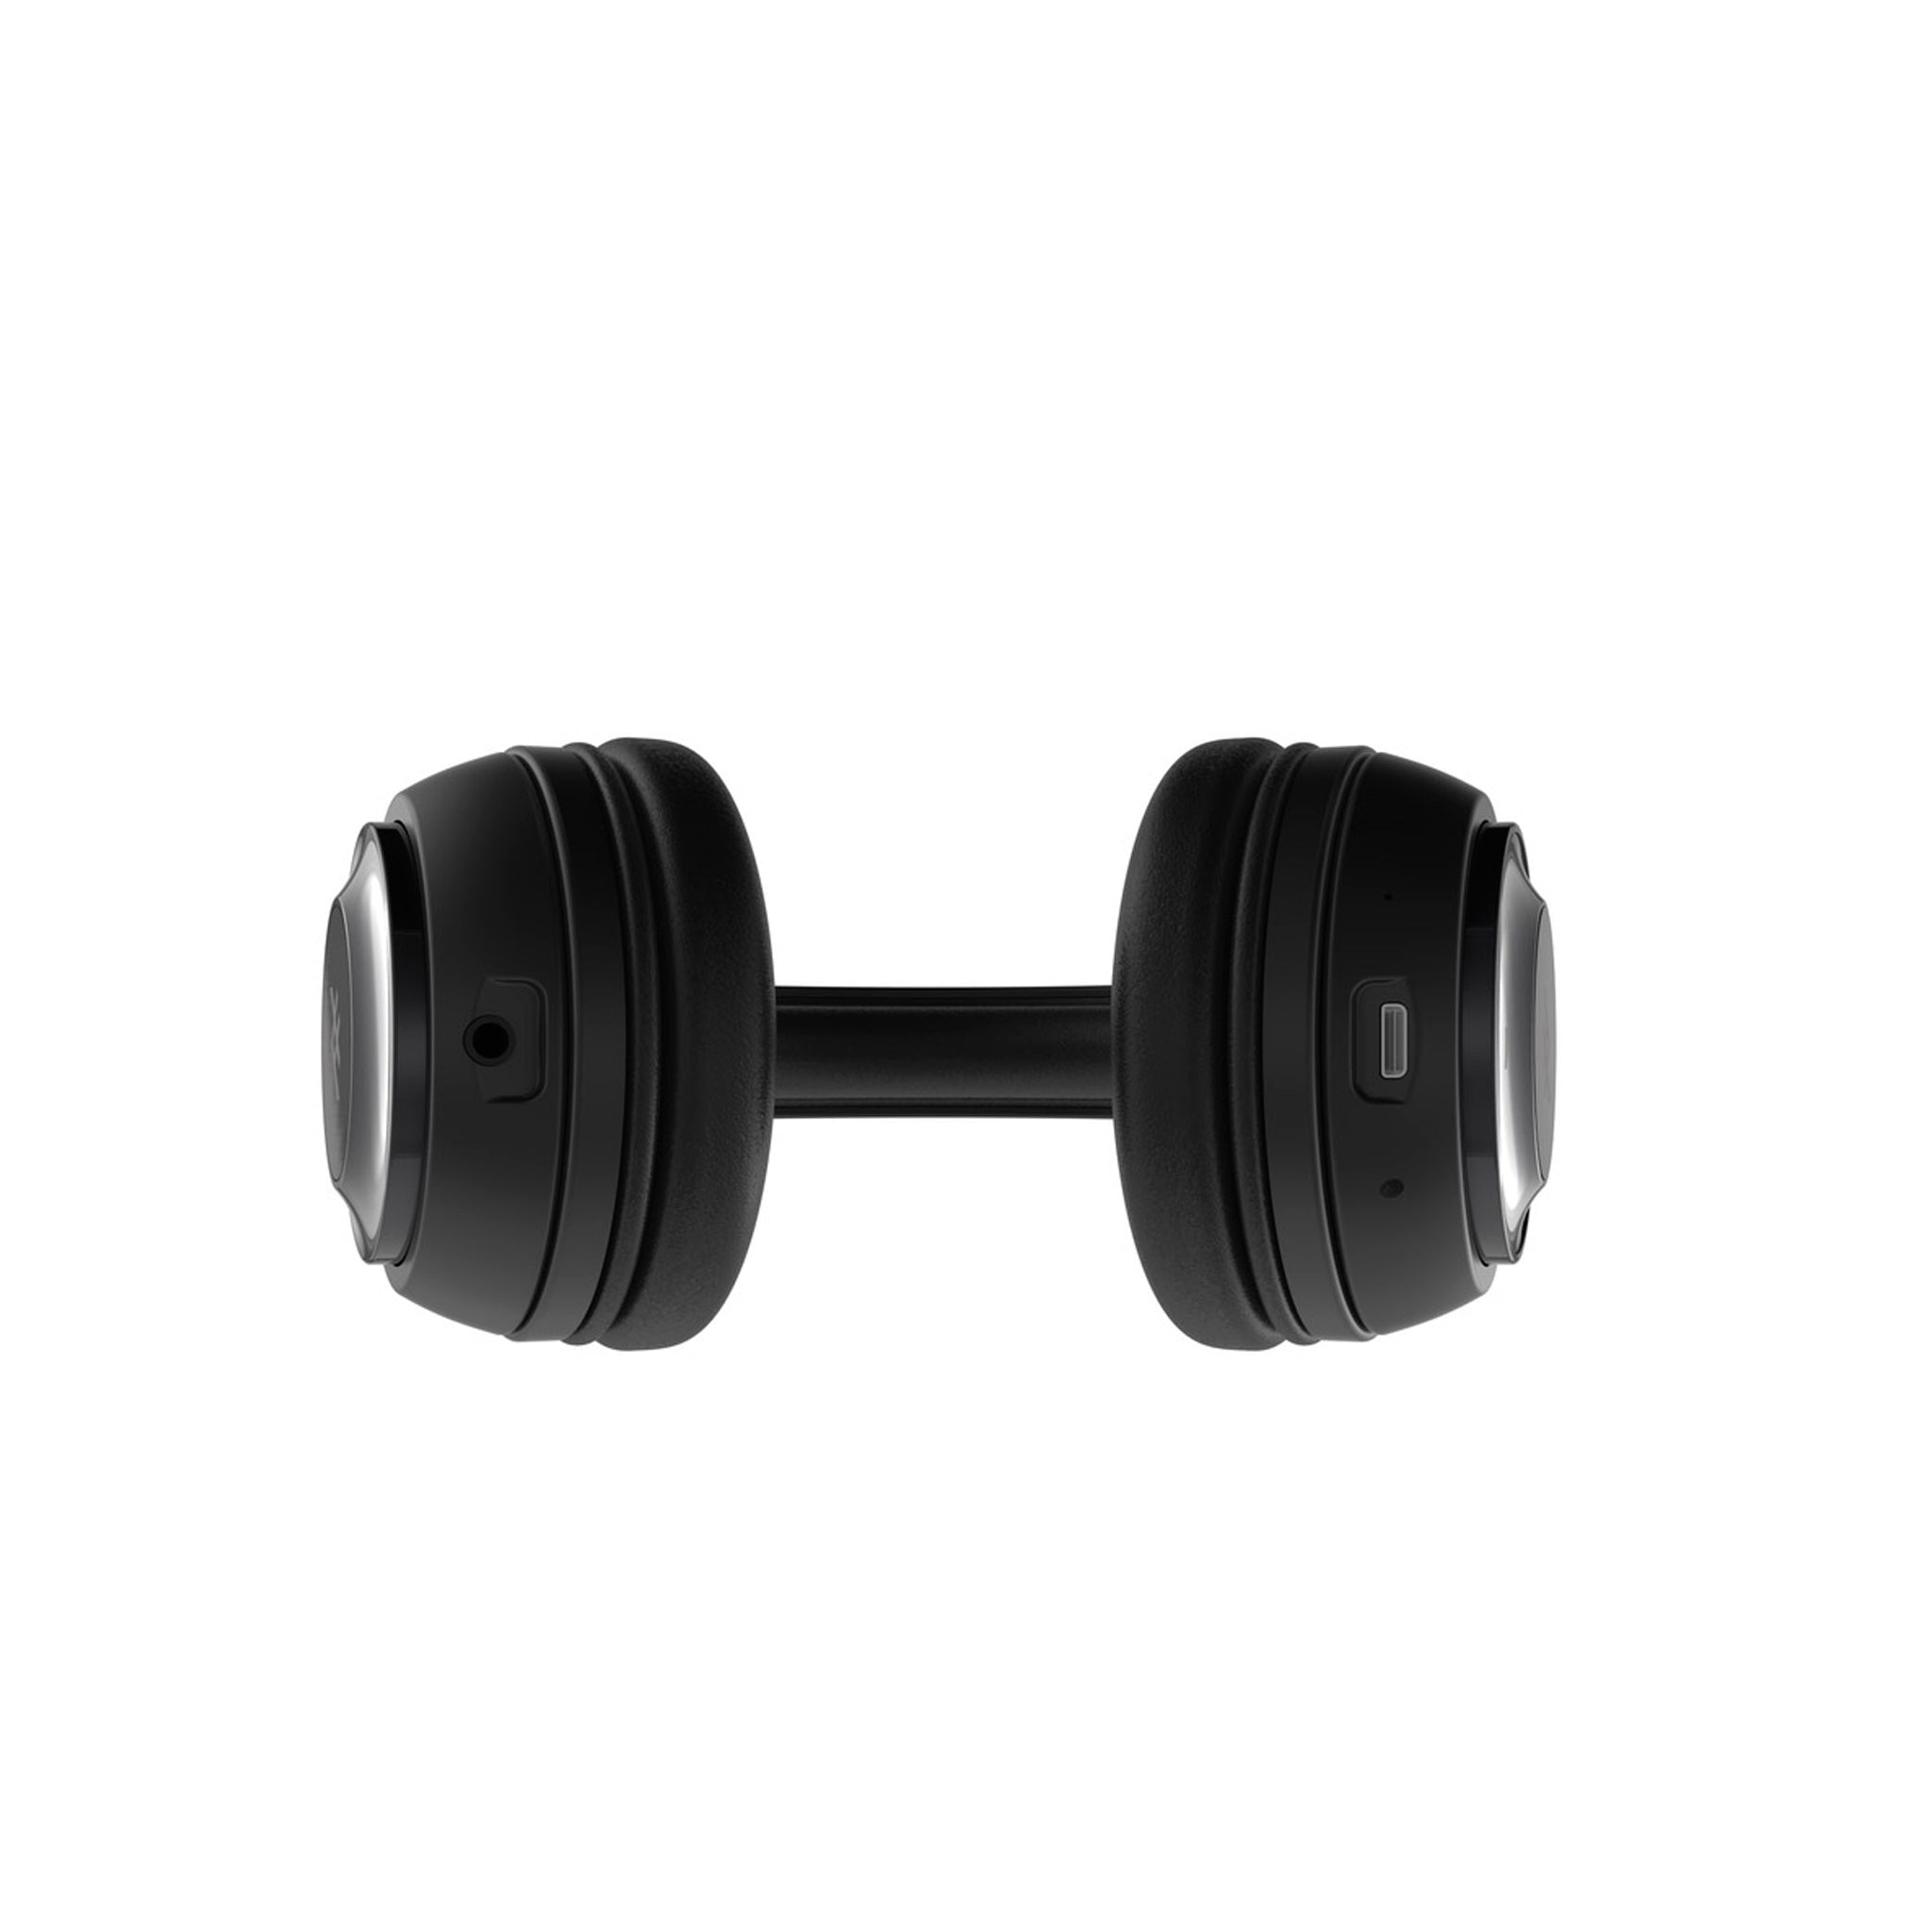 Ifrogz - Toxix Over Ear Bluetooth Headphones - Black